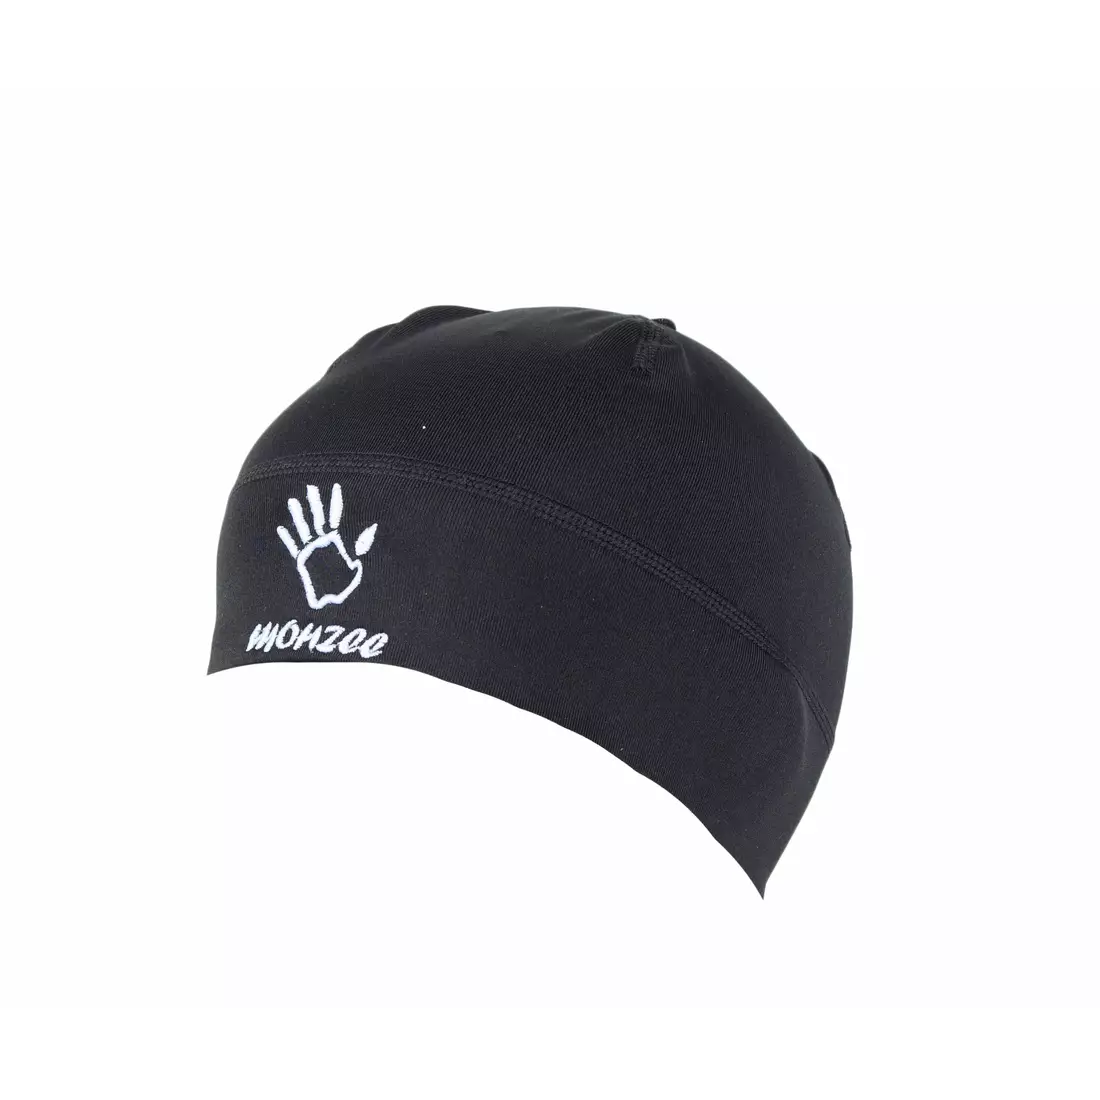 MONZEE - sports cap 14/01 B. black